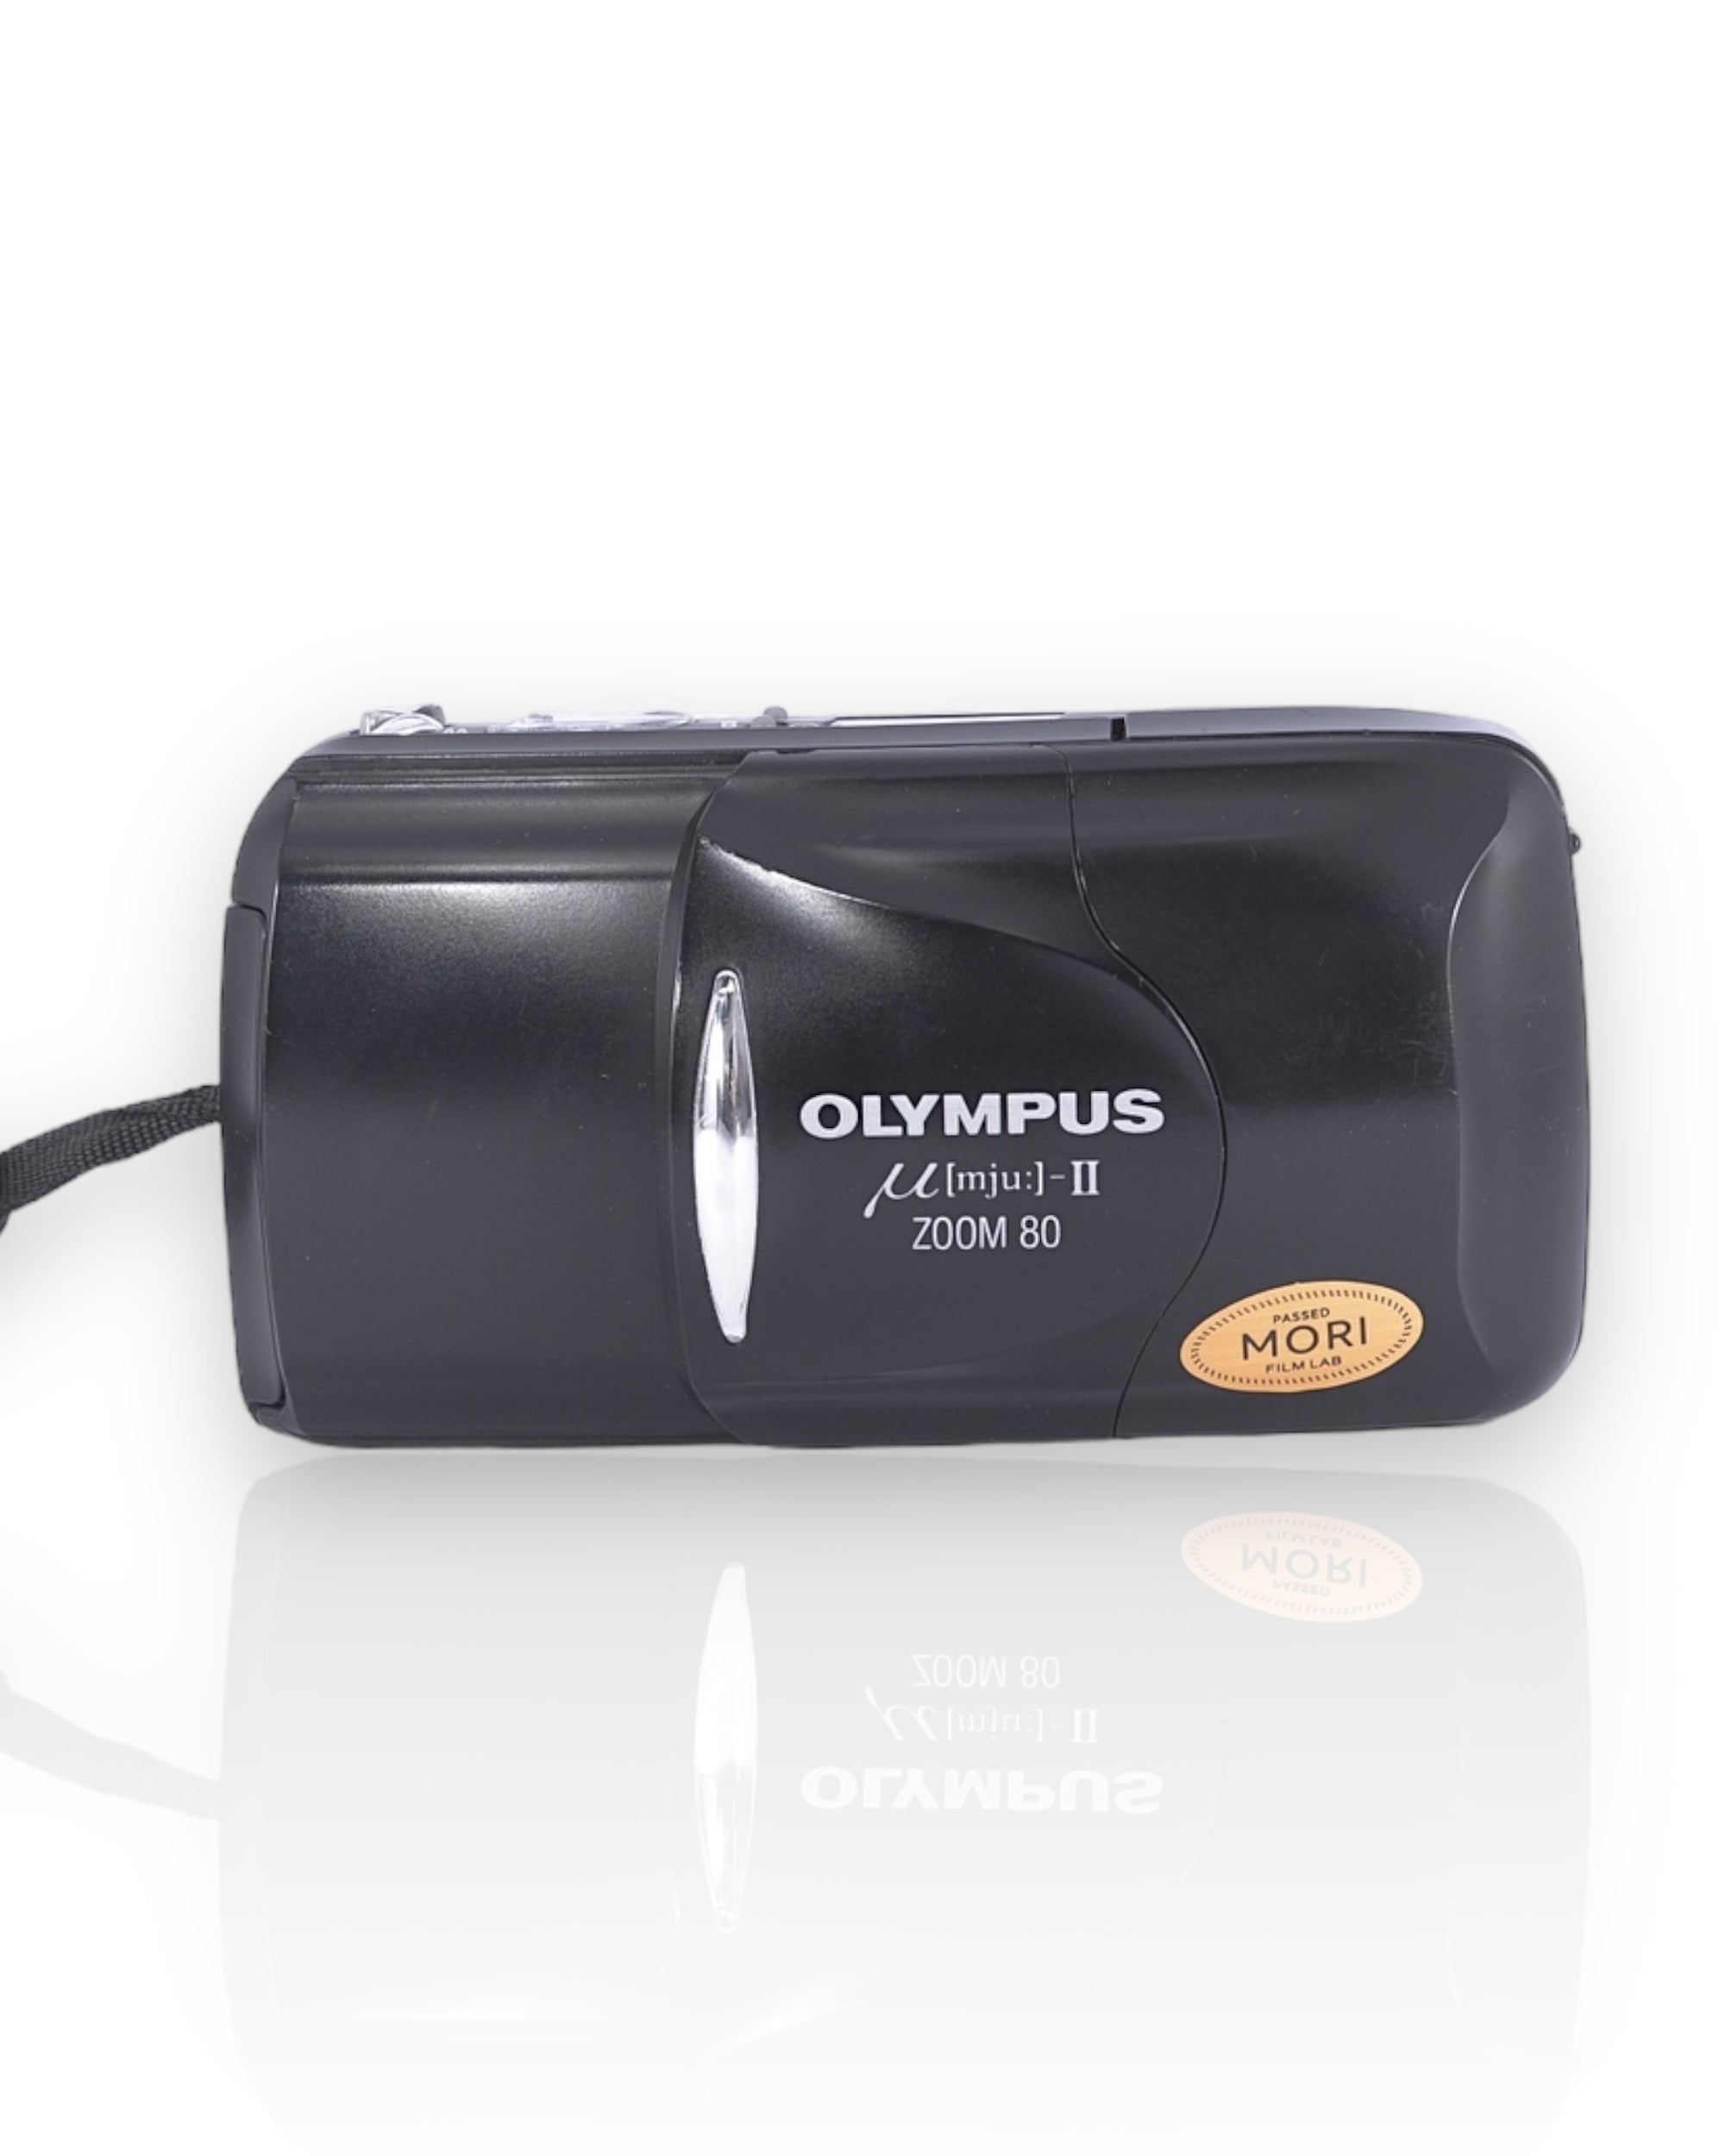 Olympus Mju-II Zoom 80 35mm point & shoot camera with 38-80 zoom lens